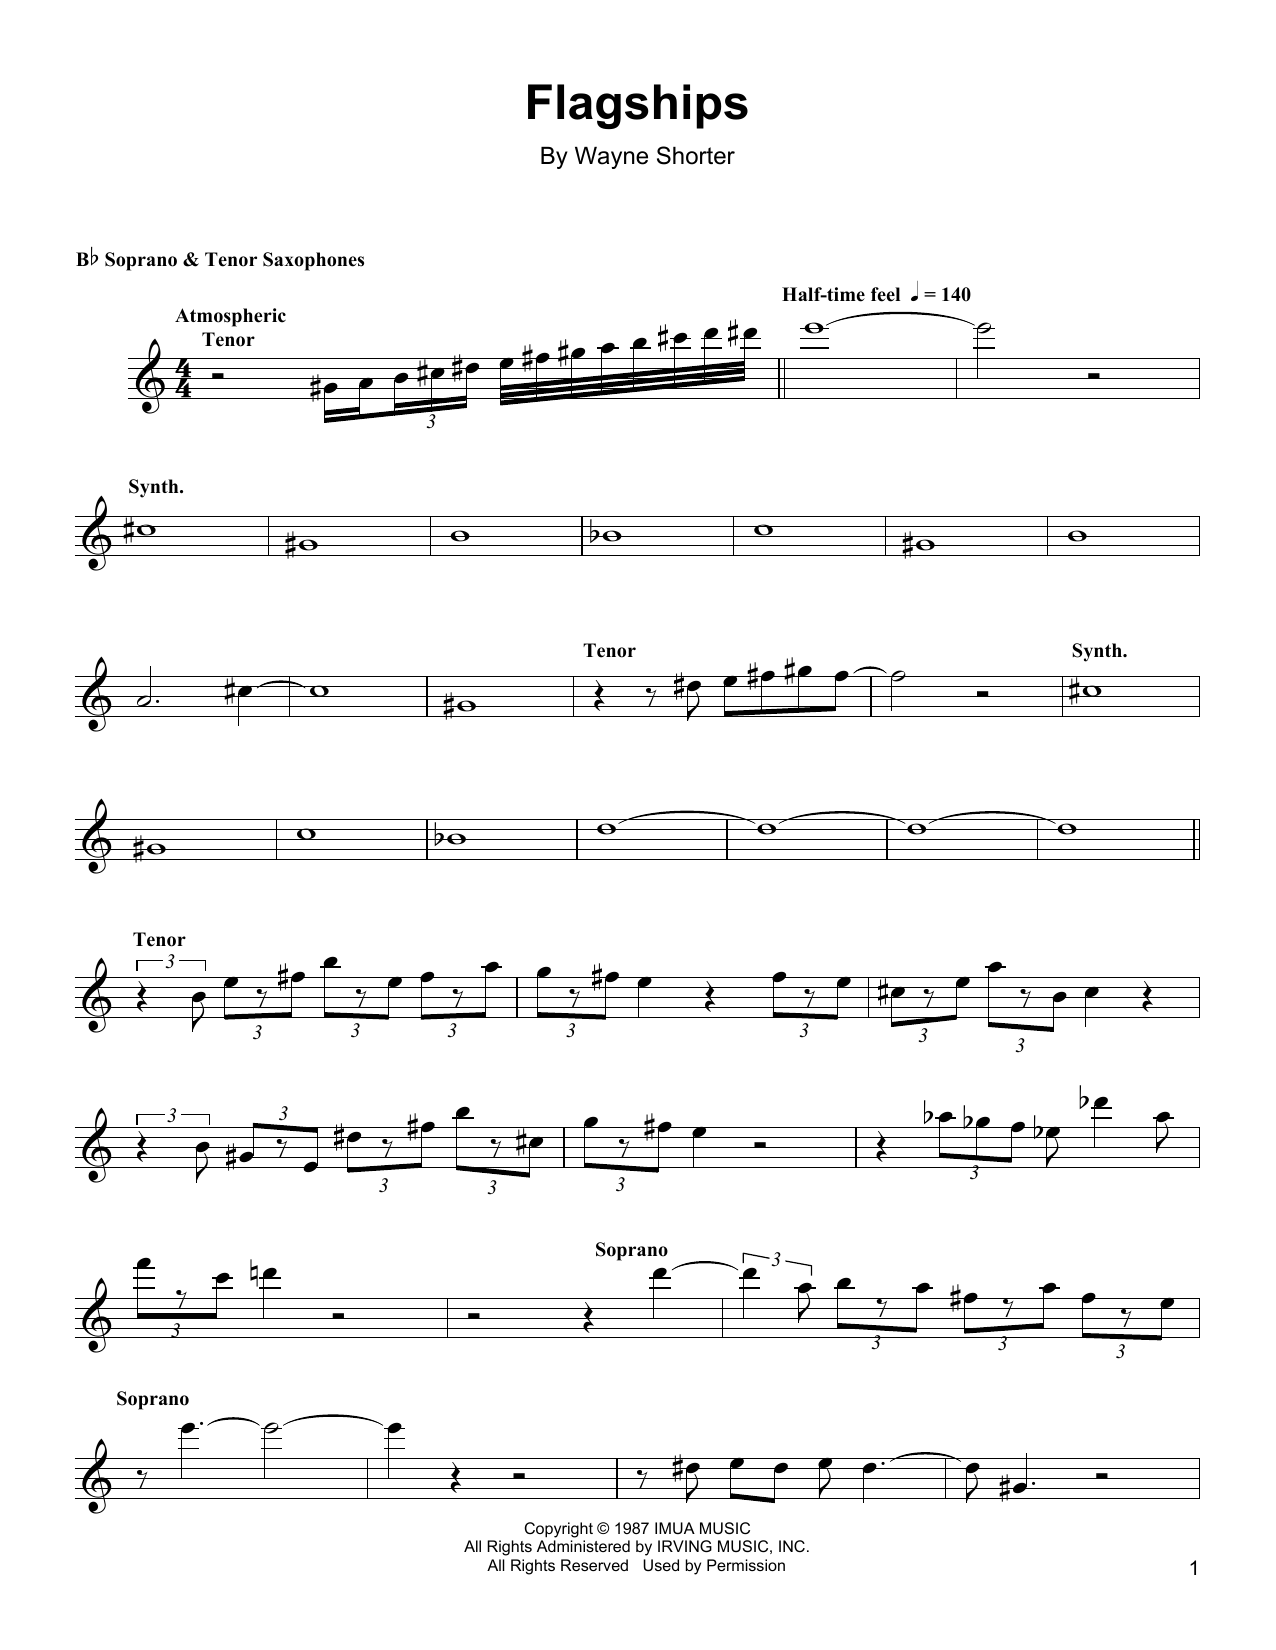 Wayne Shorter Flagships Sheet Music Notes & Chords for Soprano Sax Transcription - Download or Print PDF